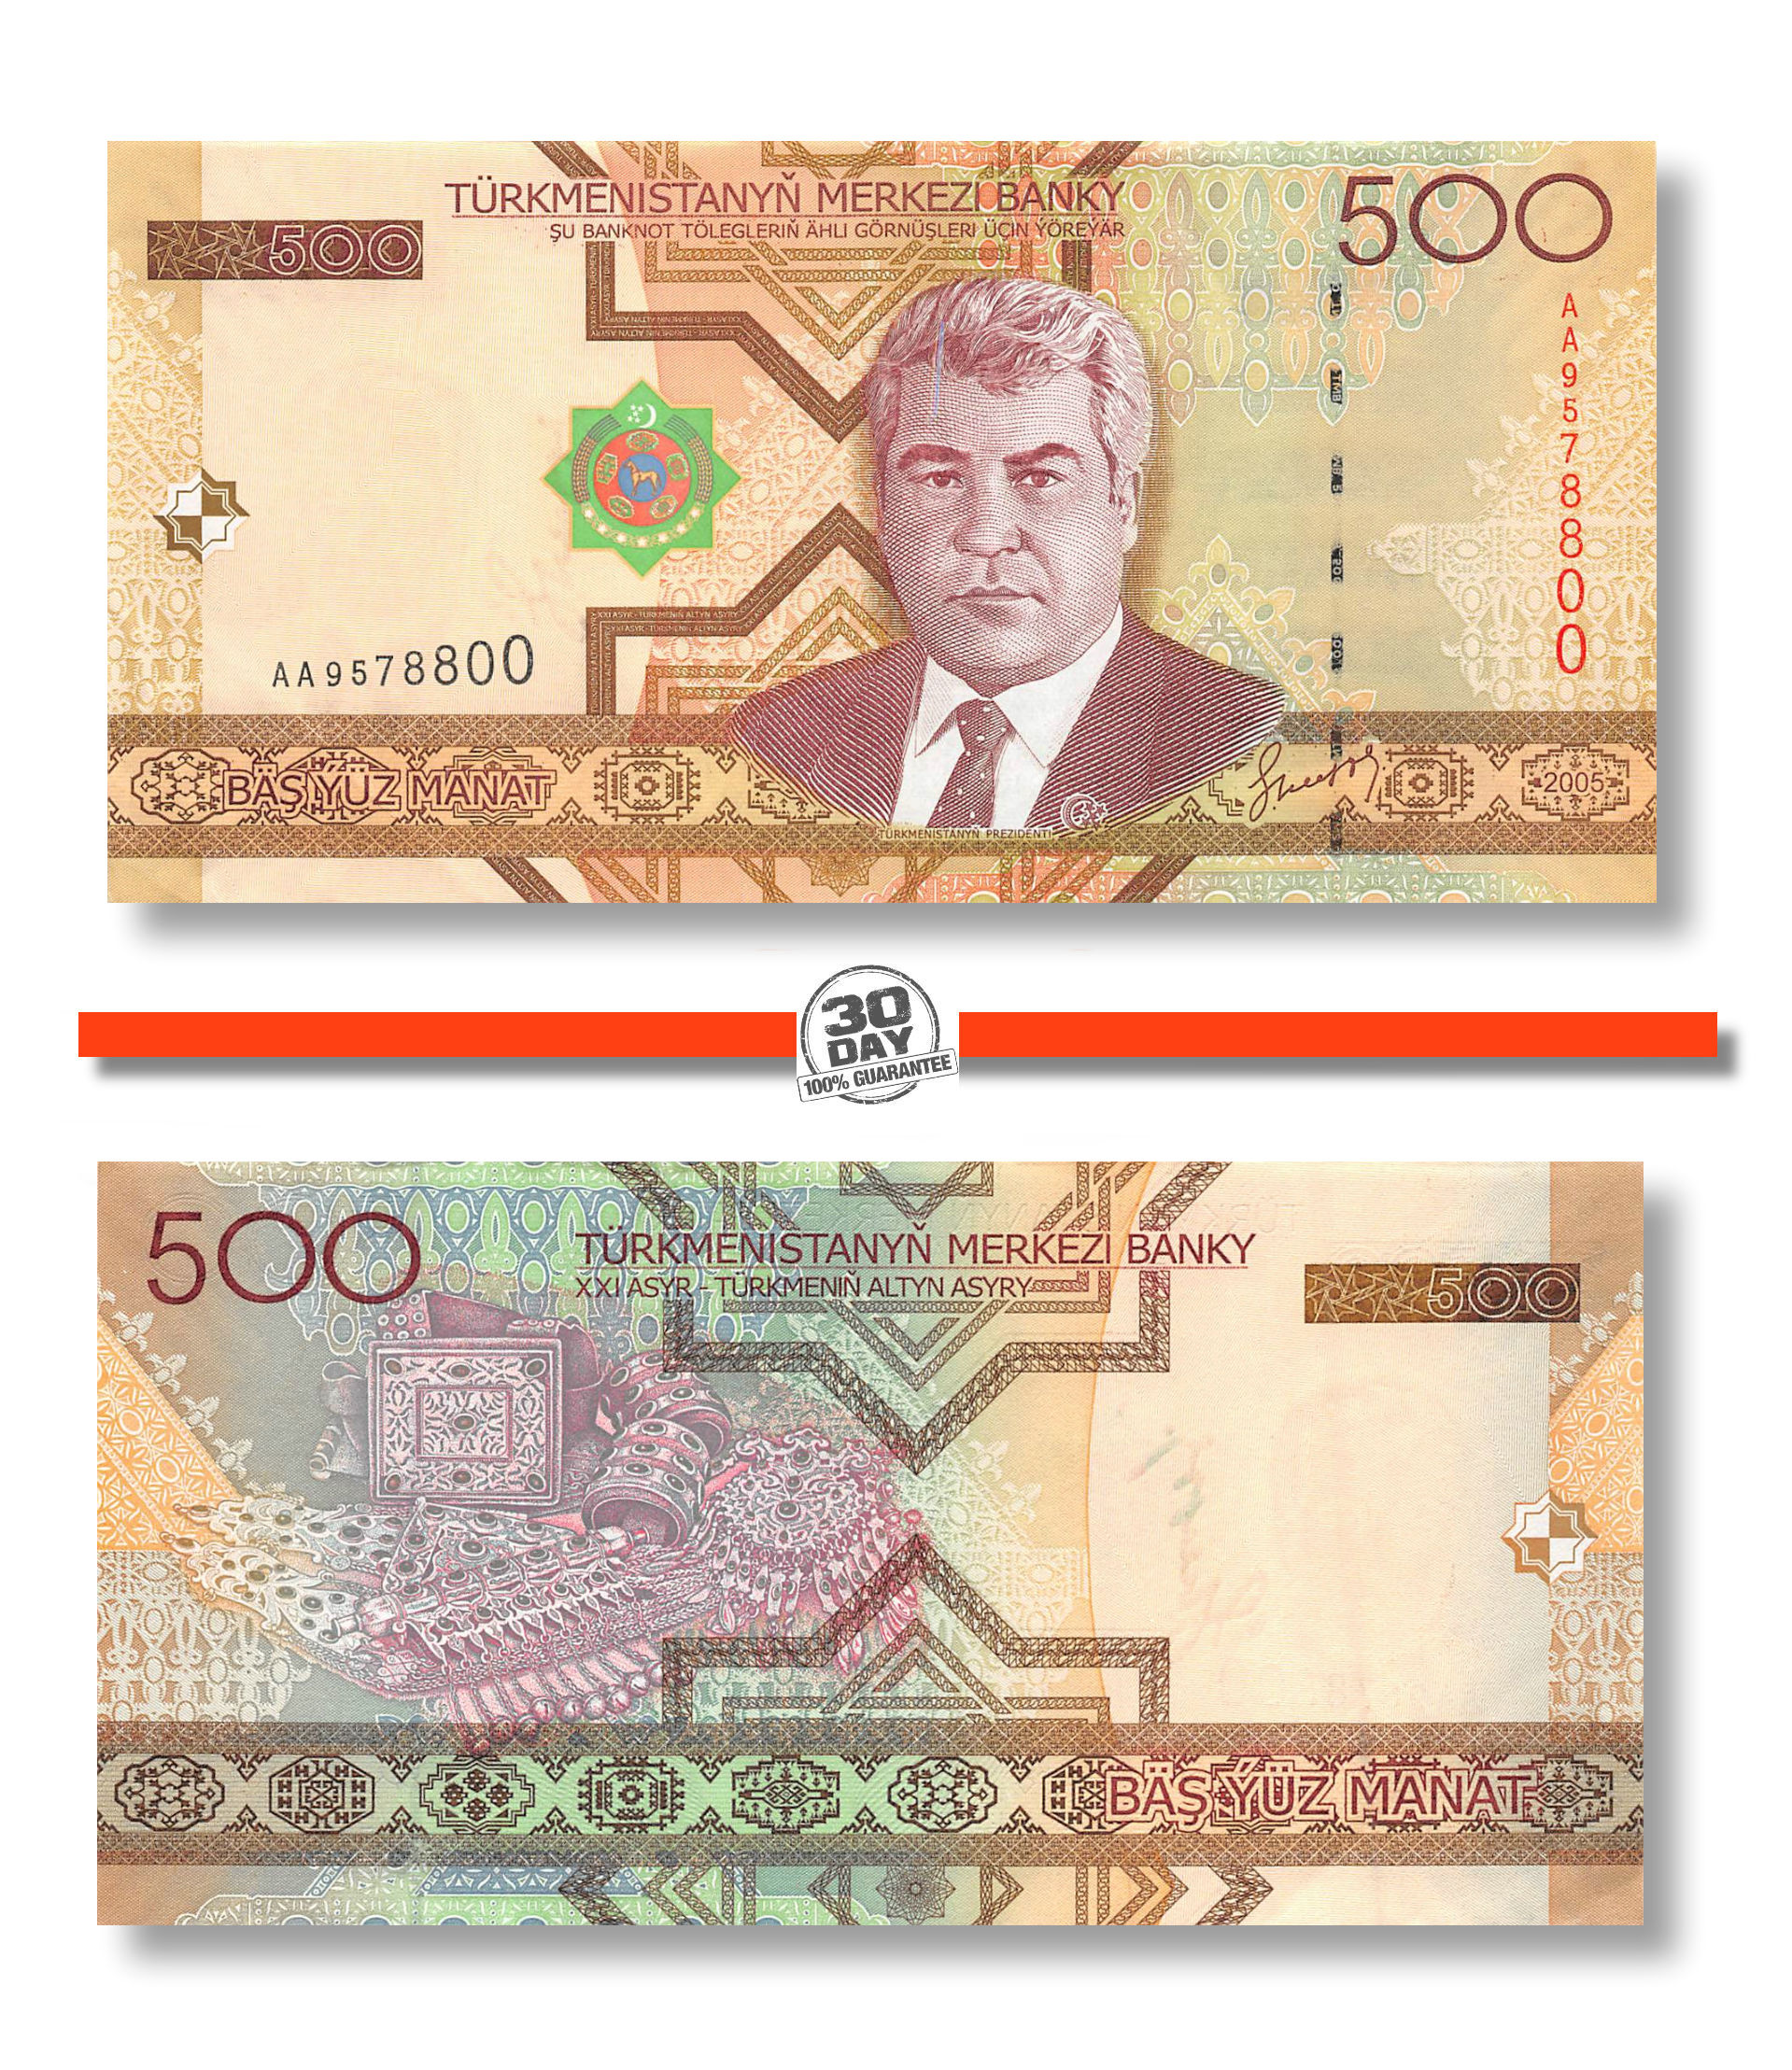 Turkmenistan 500 Manat 2005 Pick 19 UNC Uncirculated Banknote 